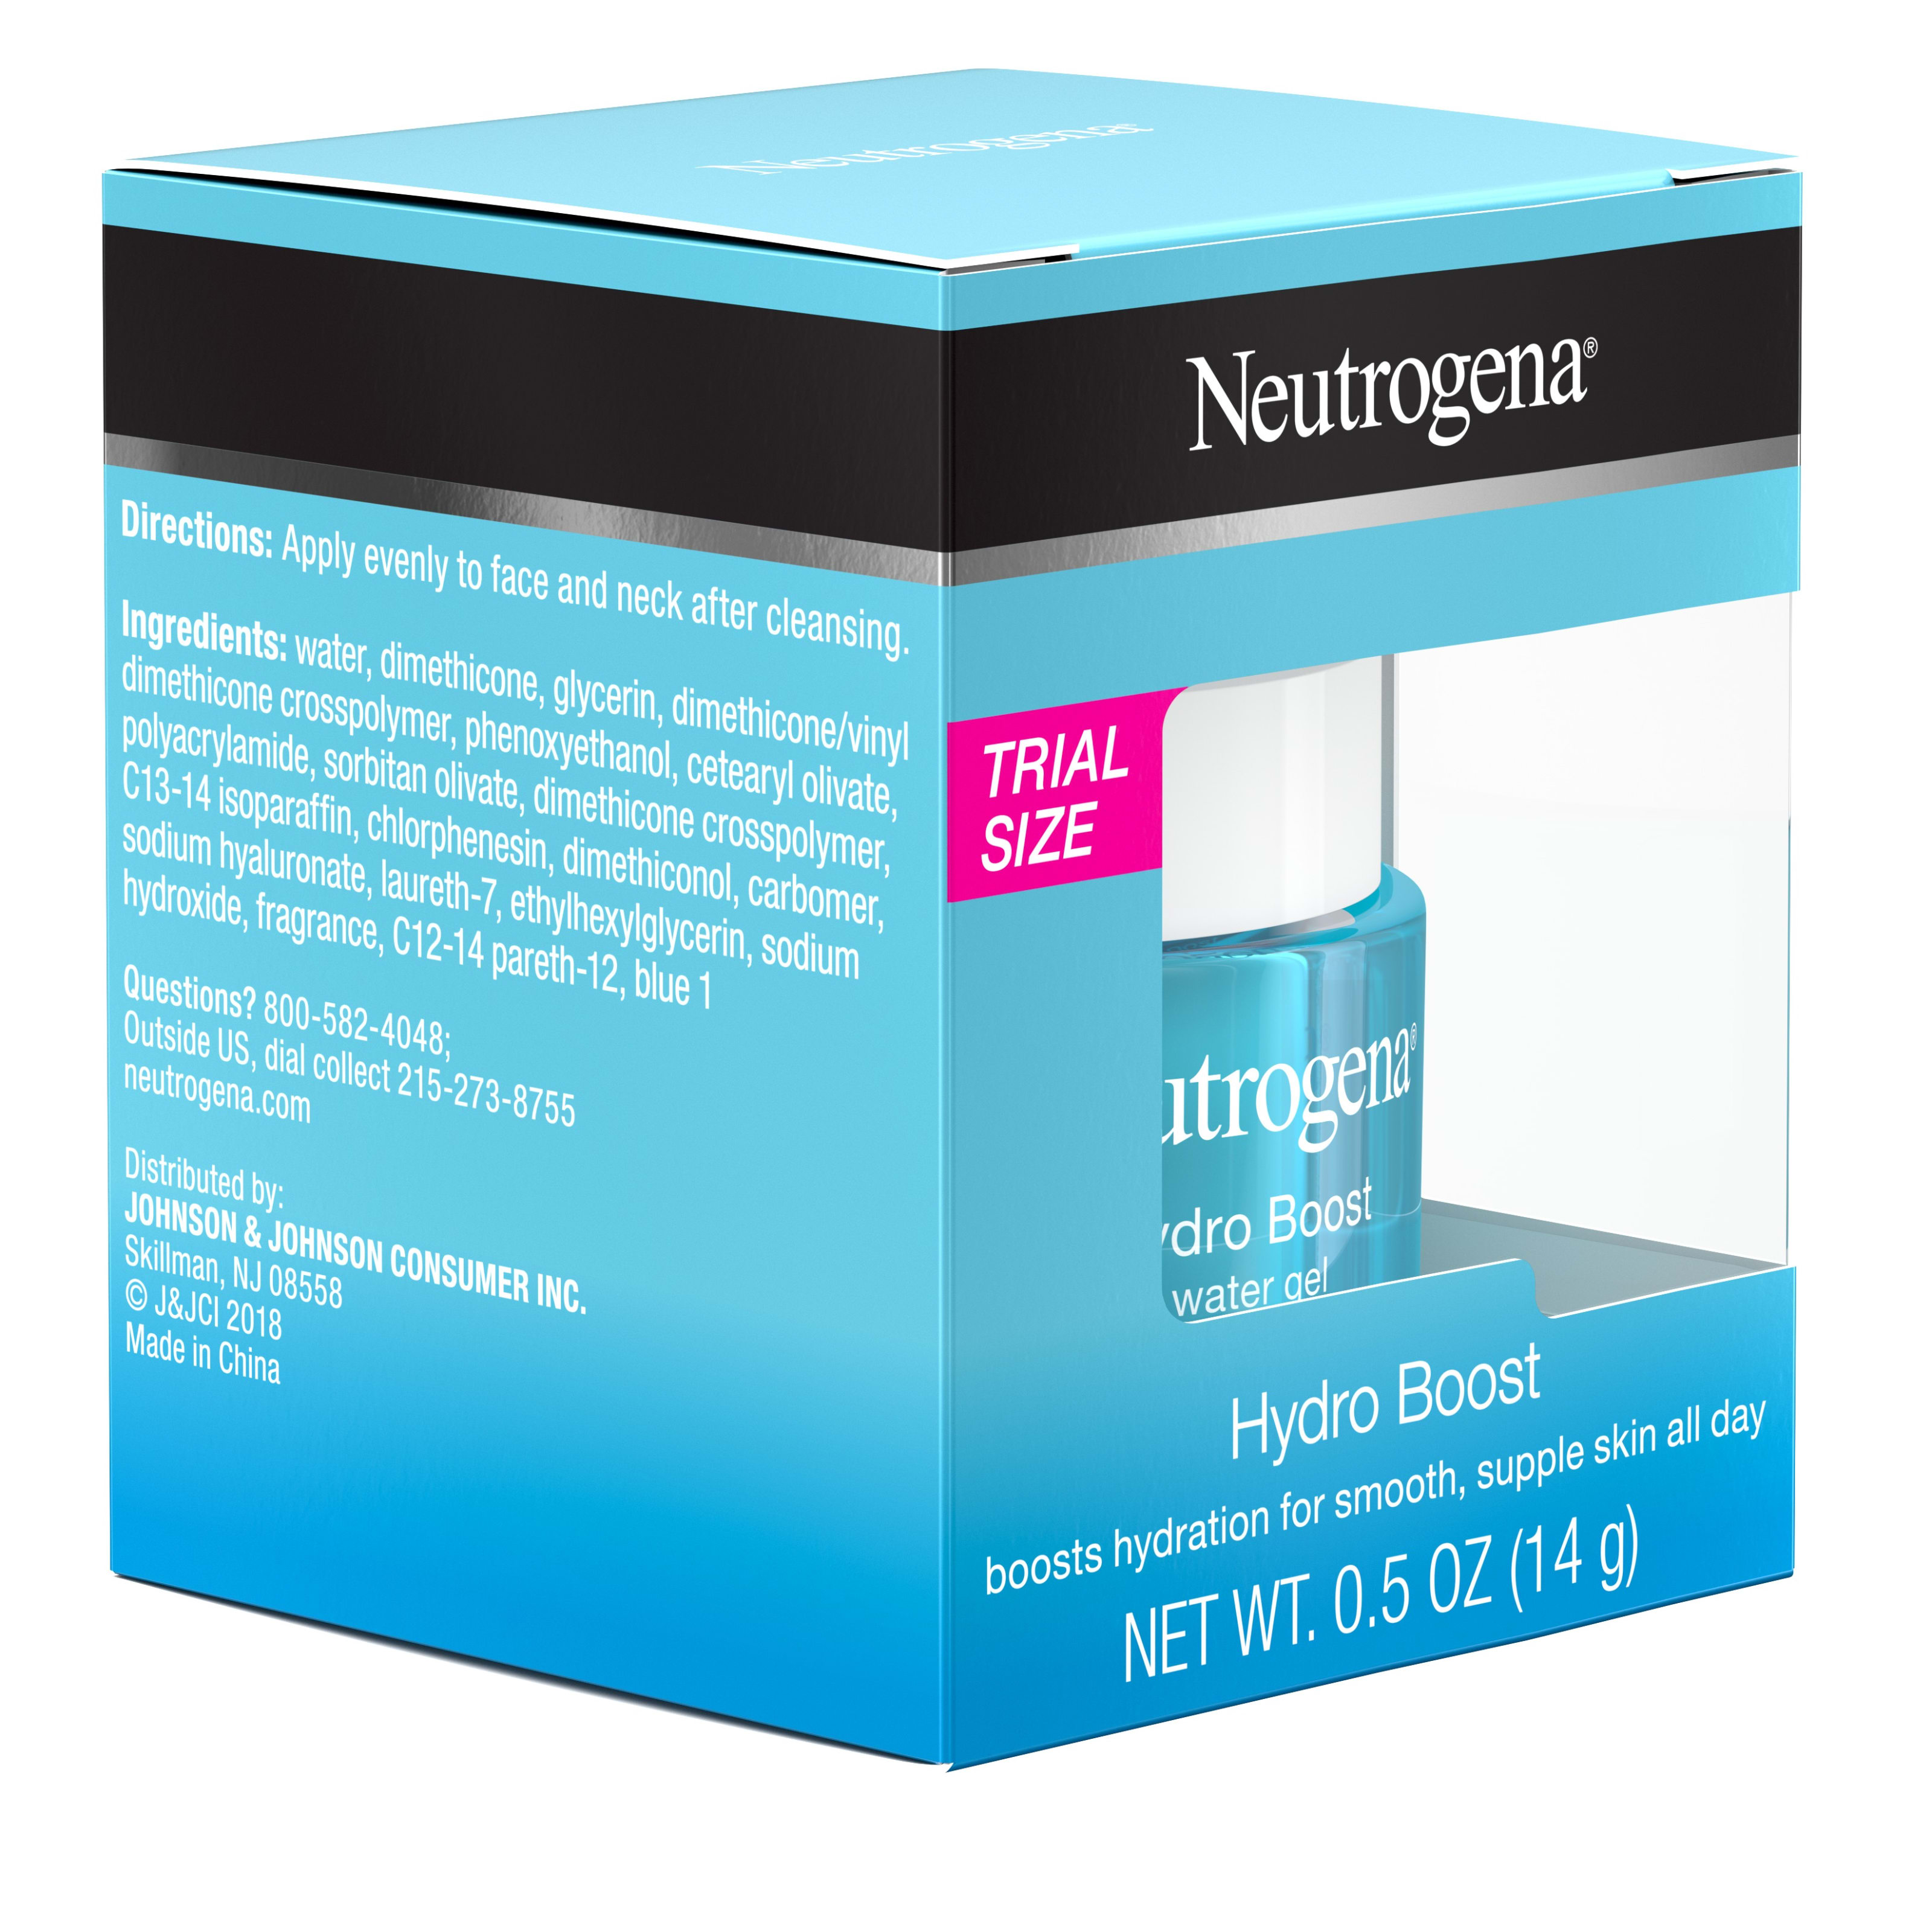 Neutrogena Hydro Boost Hyaluronic Acid Face Moisturizer for Dry Skin, 0.5 oz - image 5 of 10